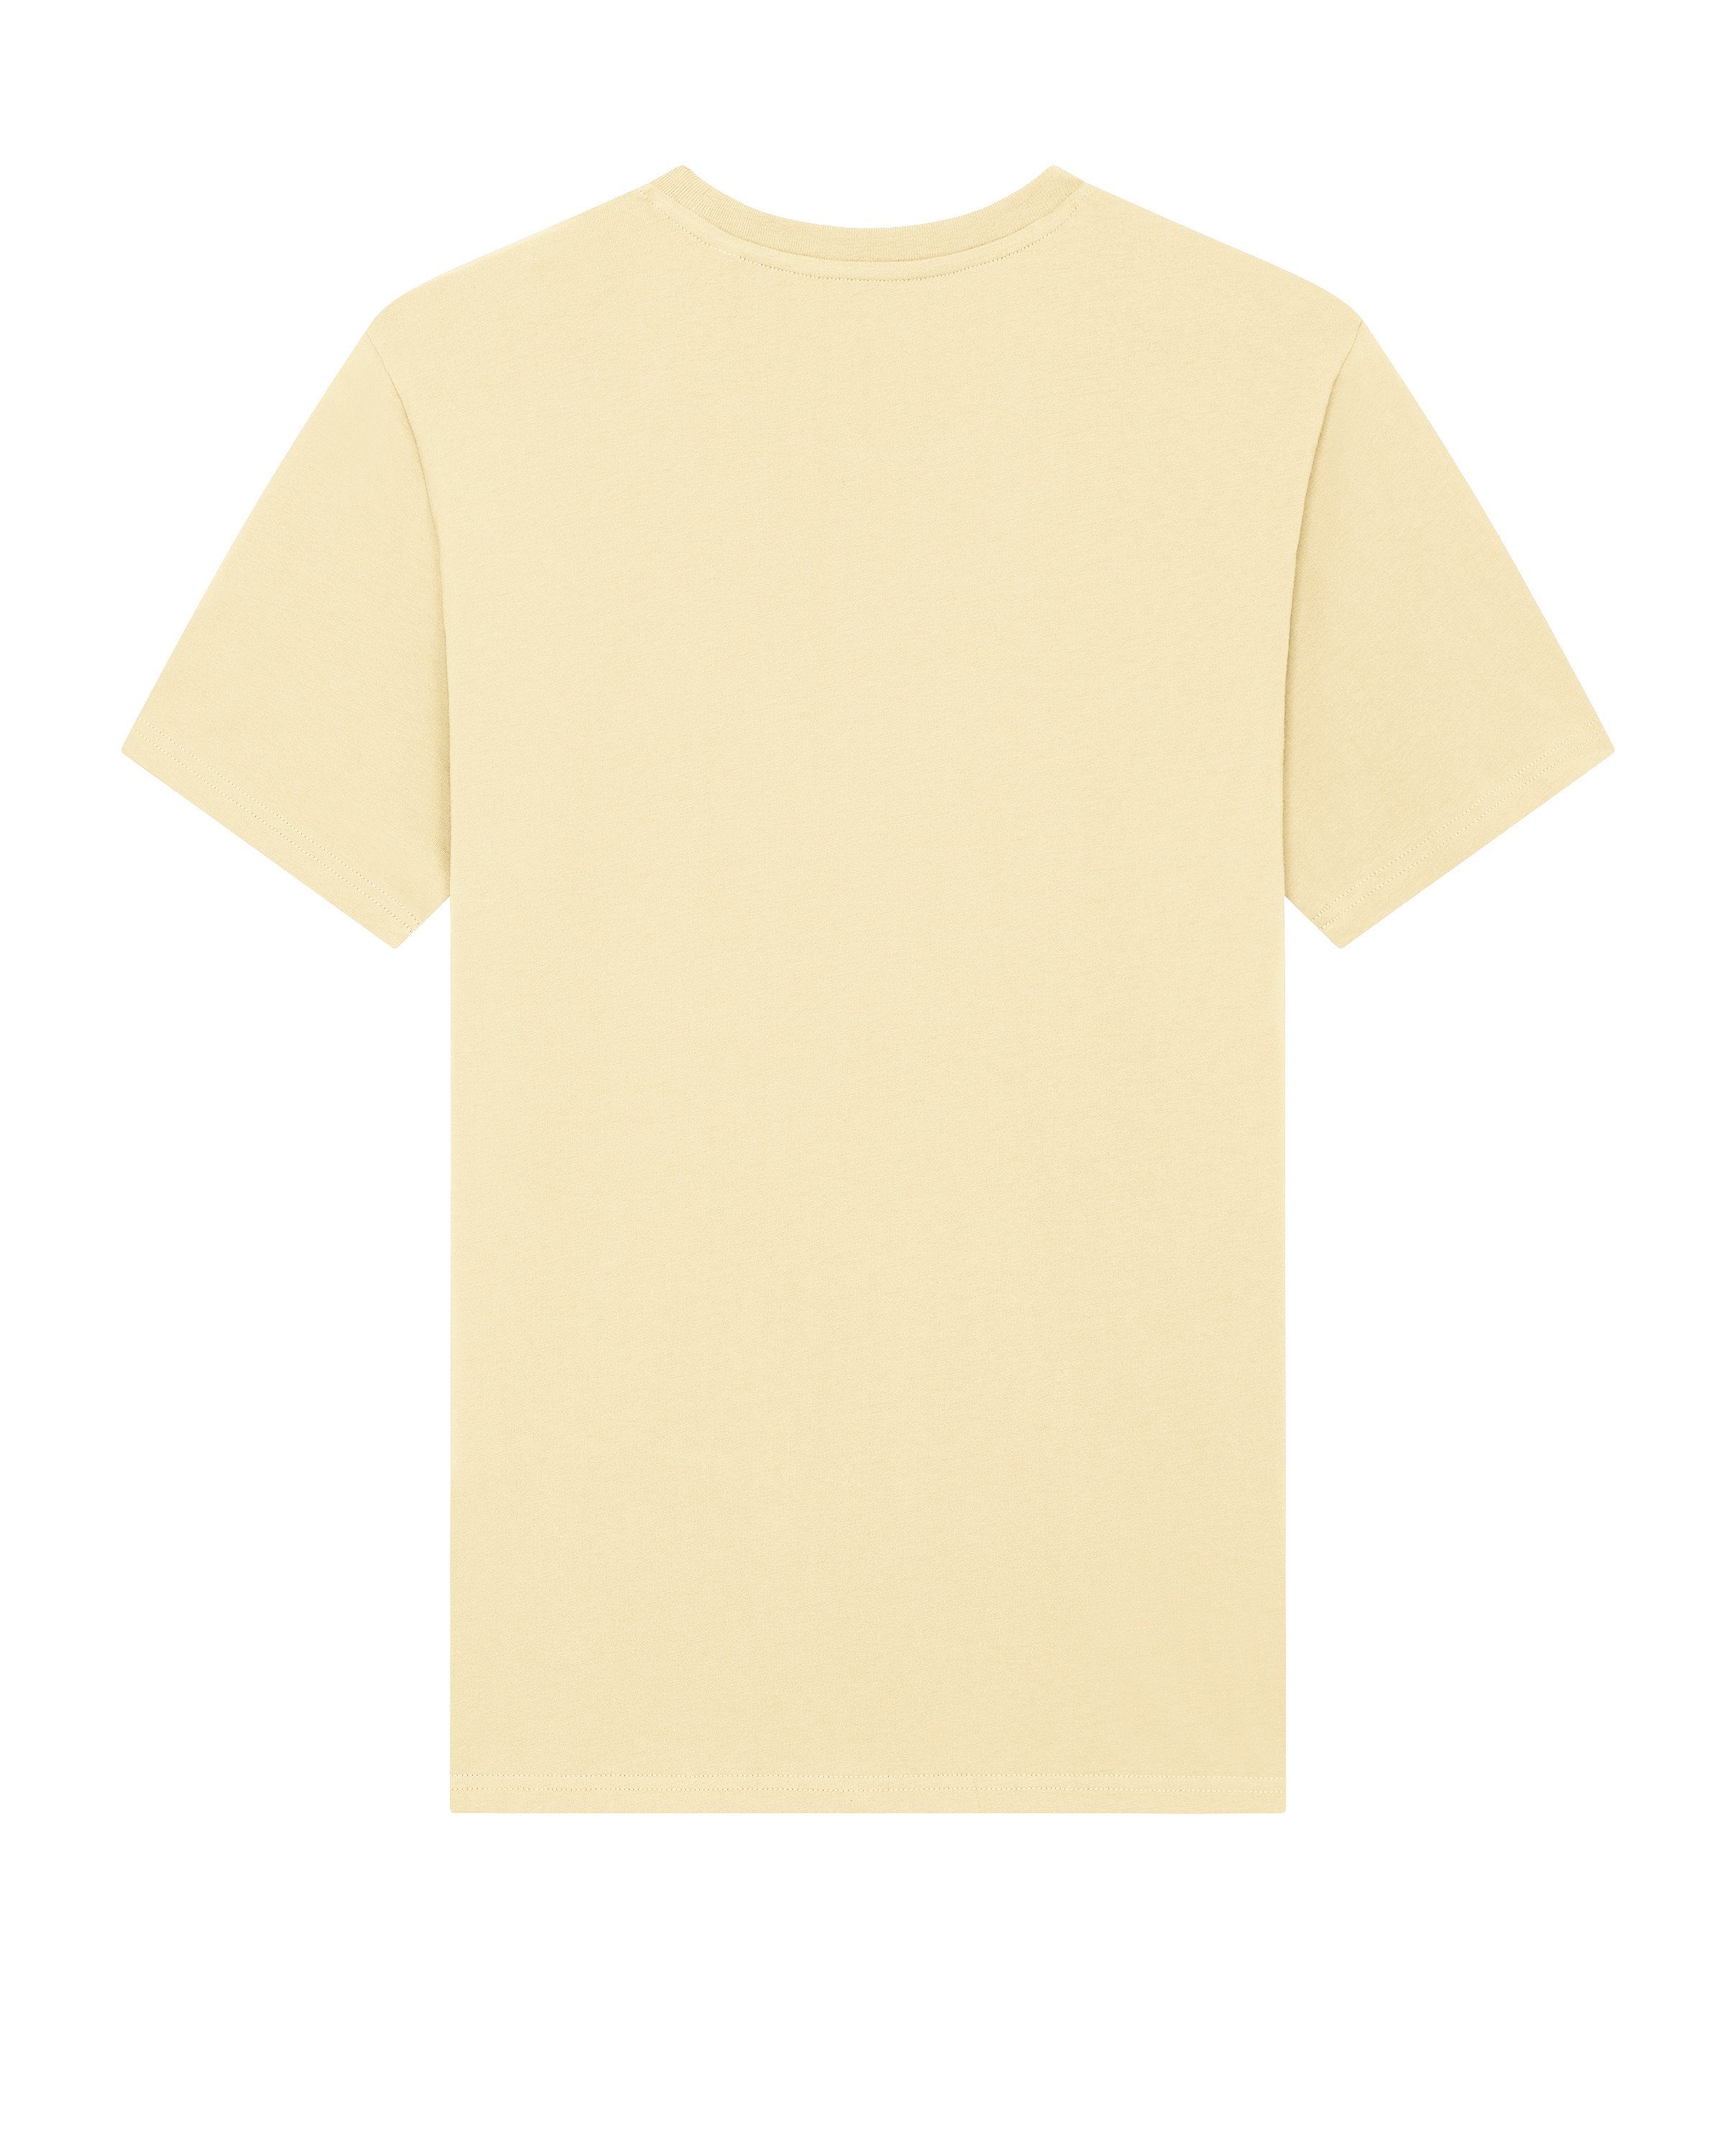 Phase Print-Shirt a Apparel (1-tlg) Not wat? Butter